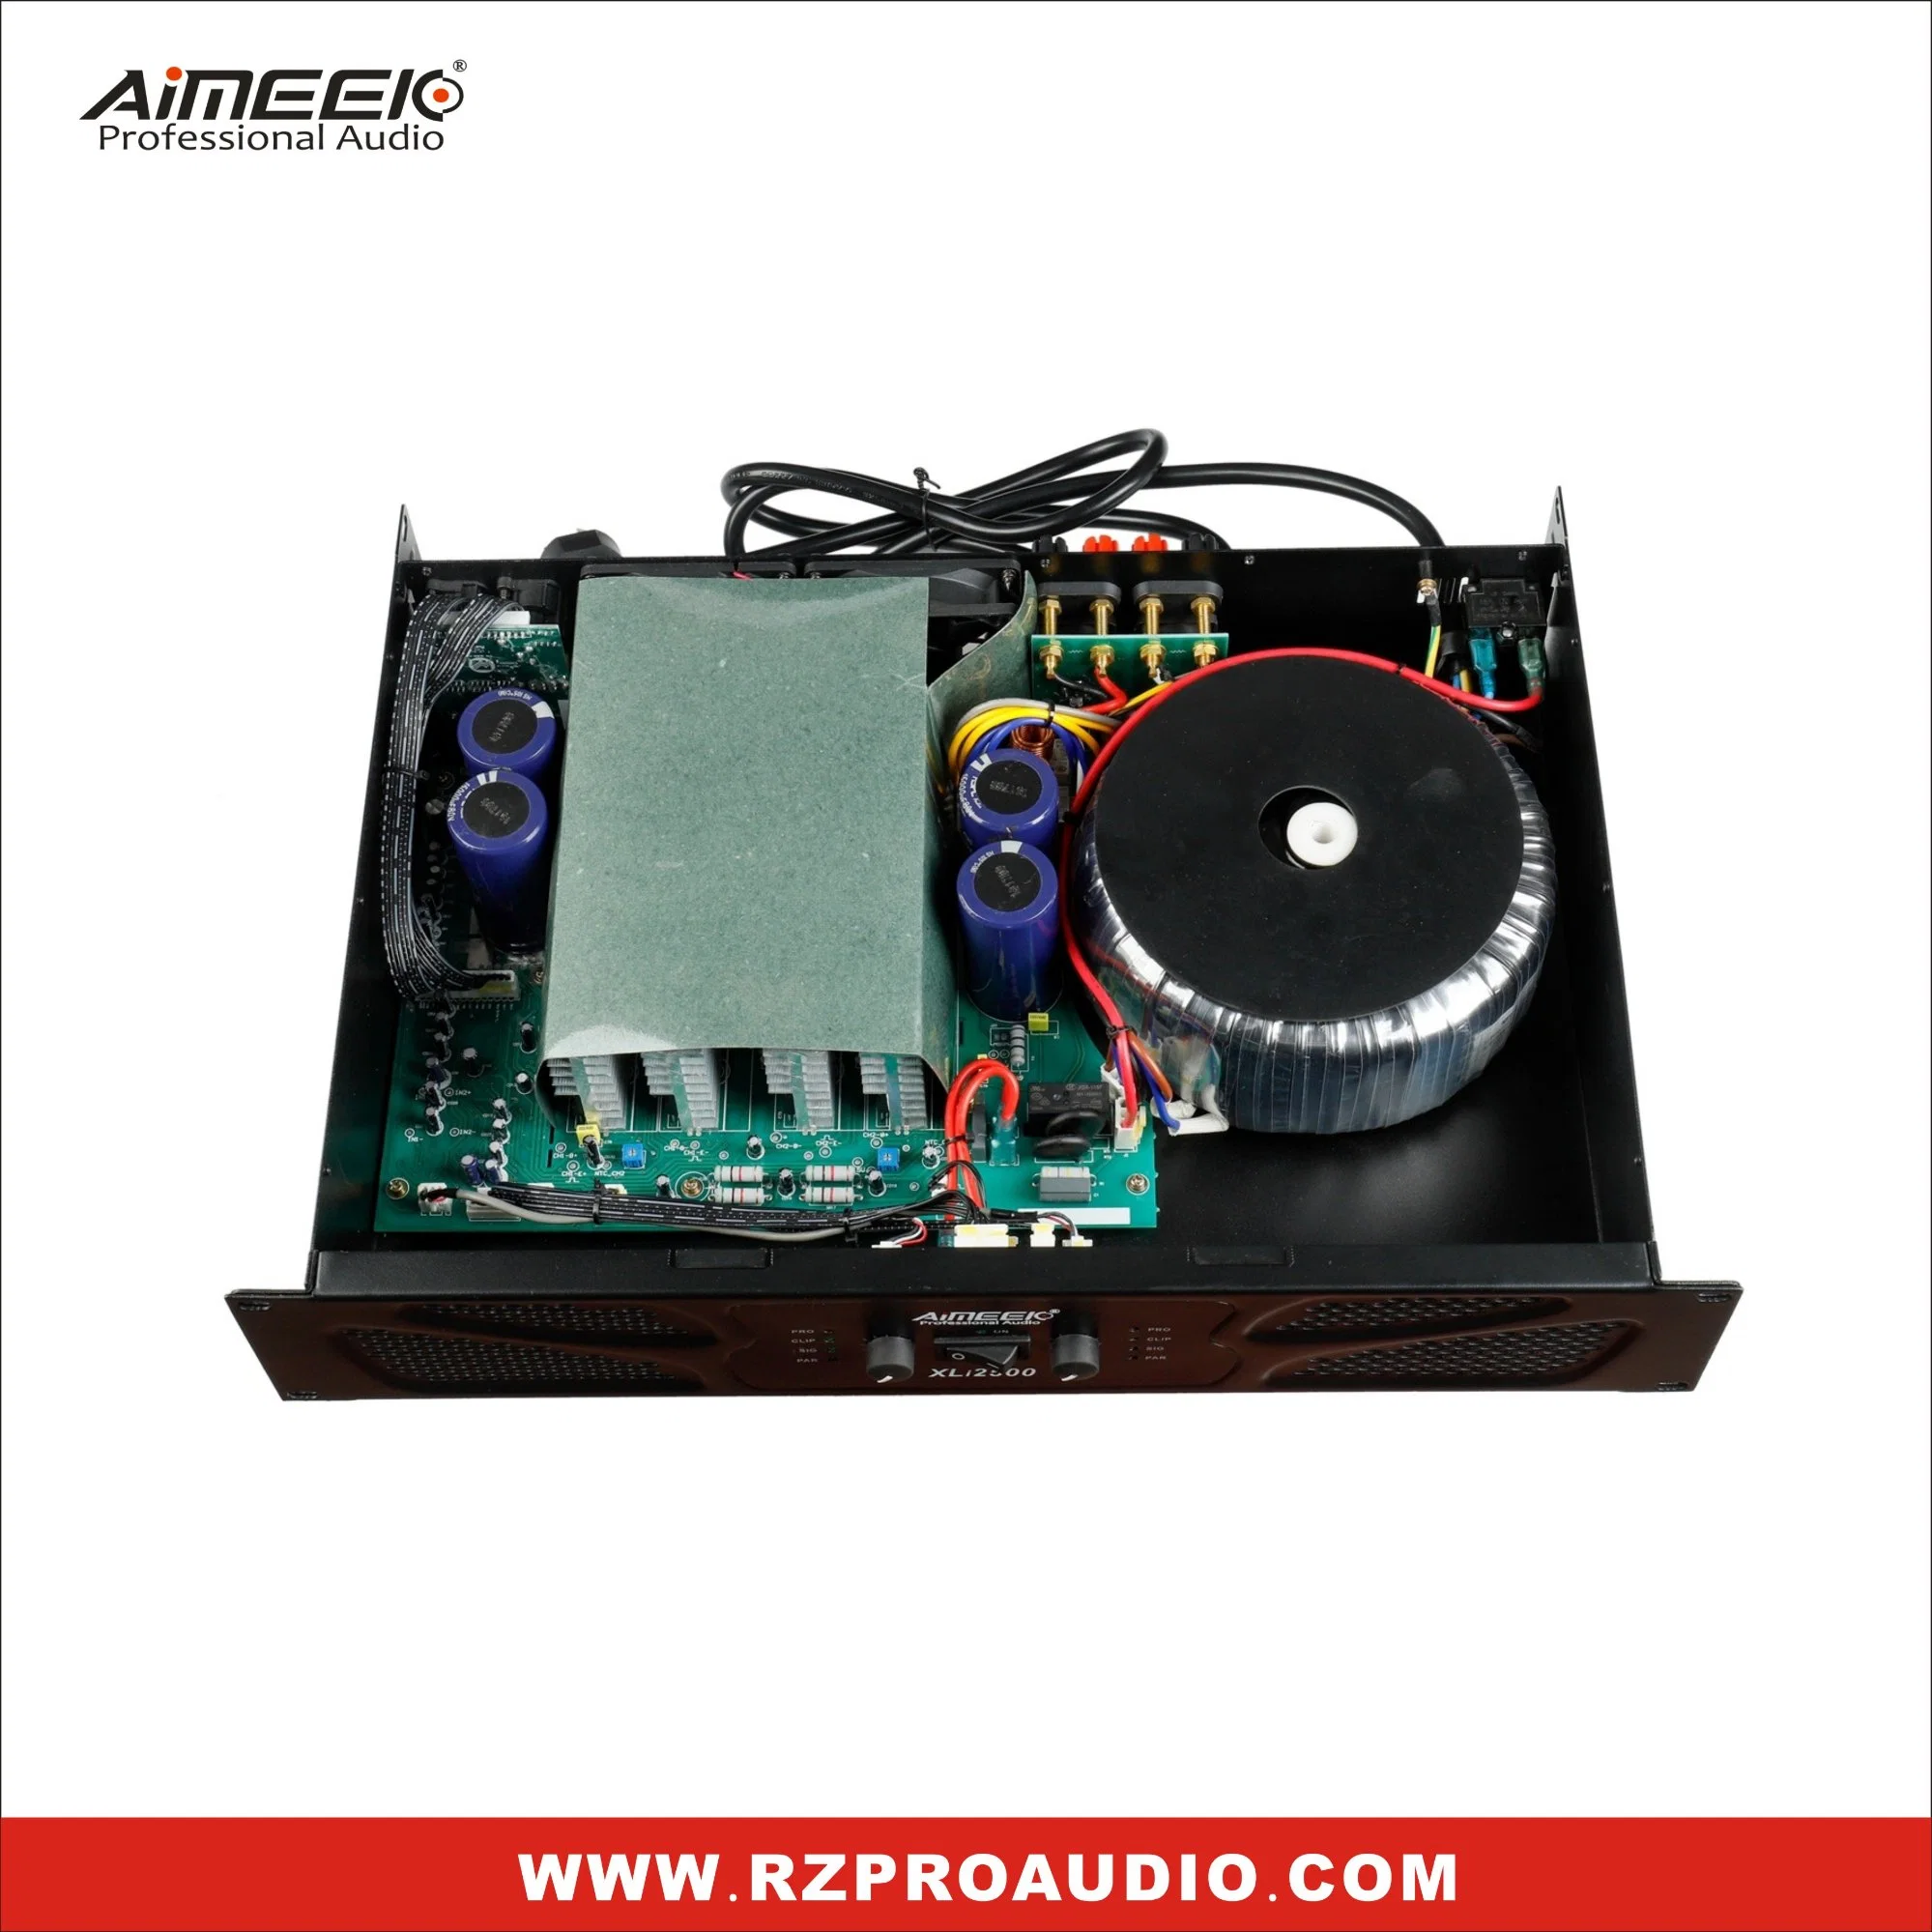 Professional PRO Audio Amplifier System 900 Watt Power Audio for Bar/Club/Home